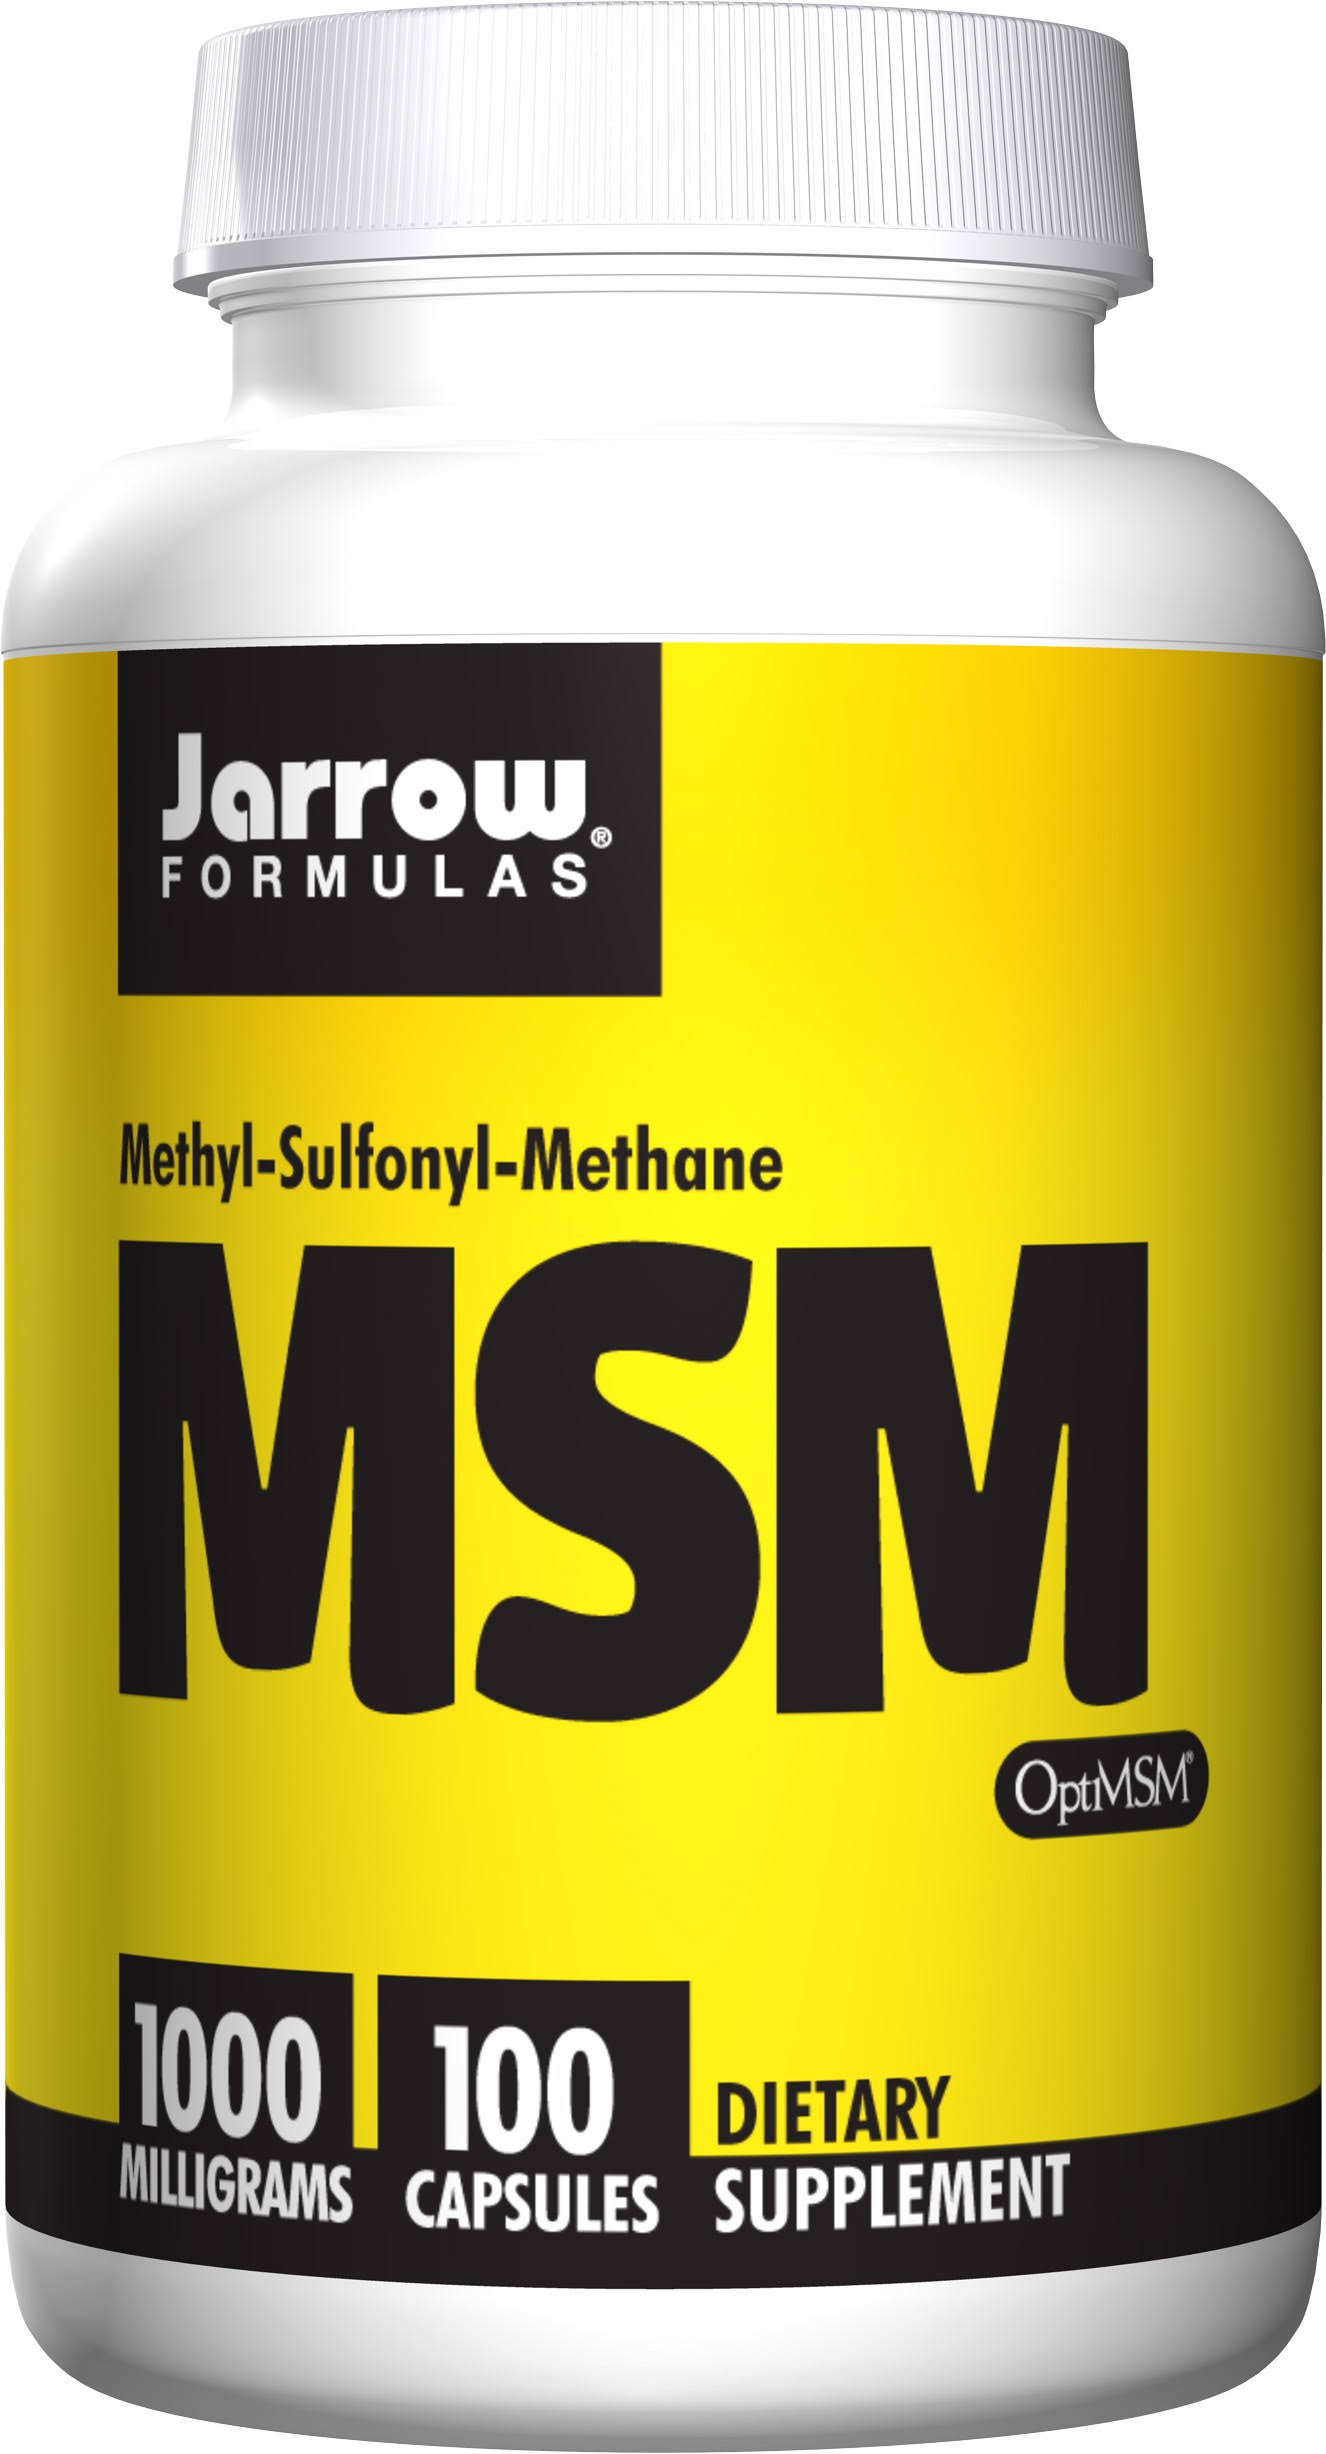 Jarrow Formulas Msm 100mg Dietary Supplement - 100 Capsules